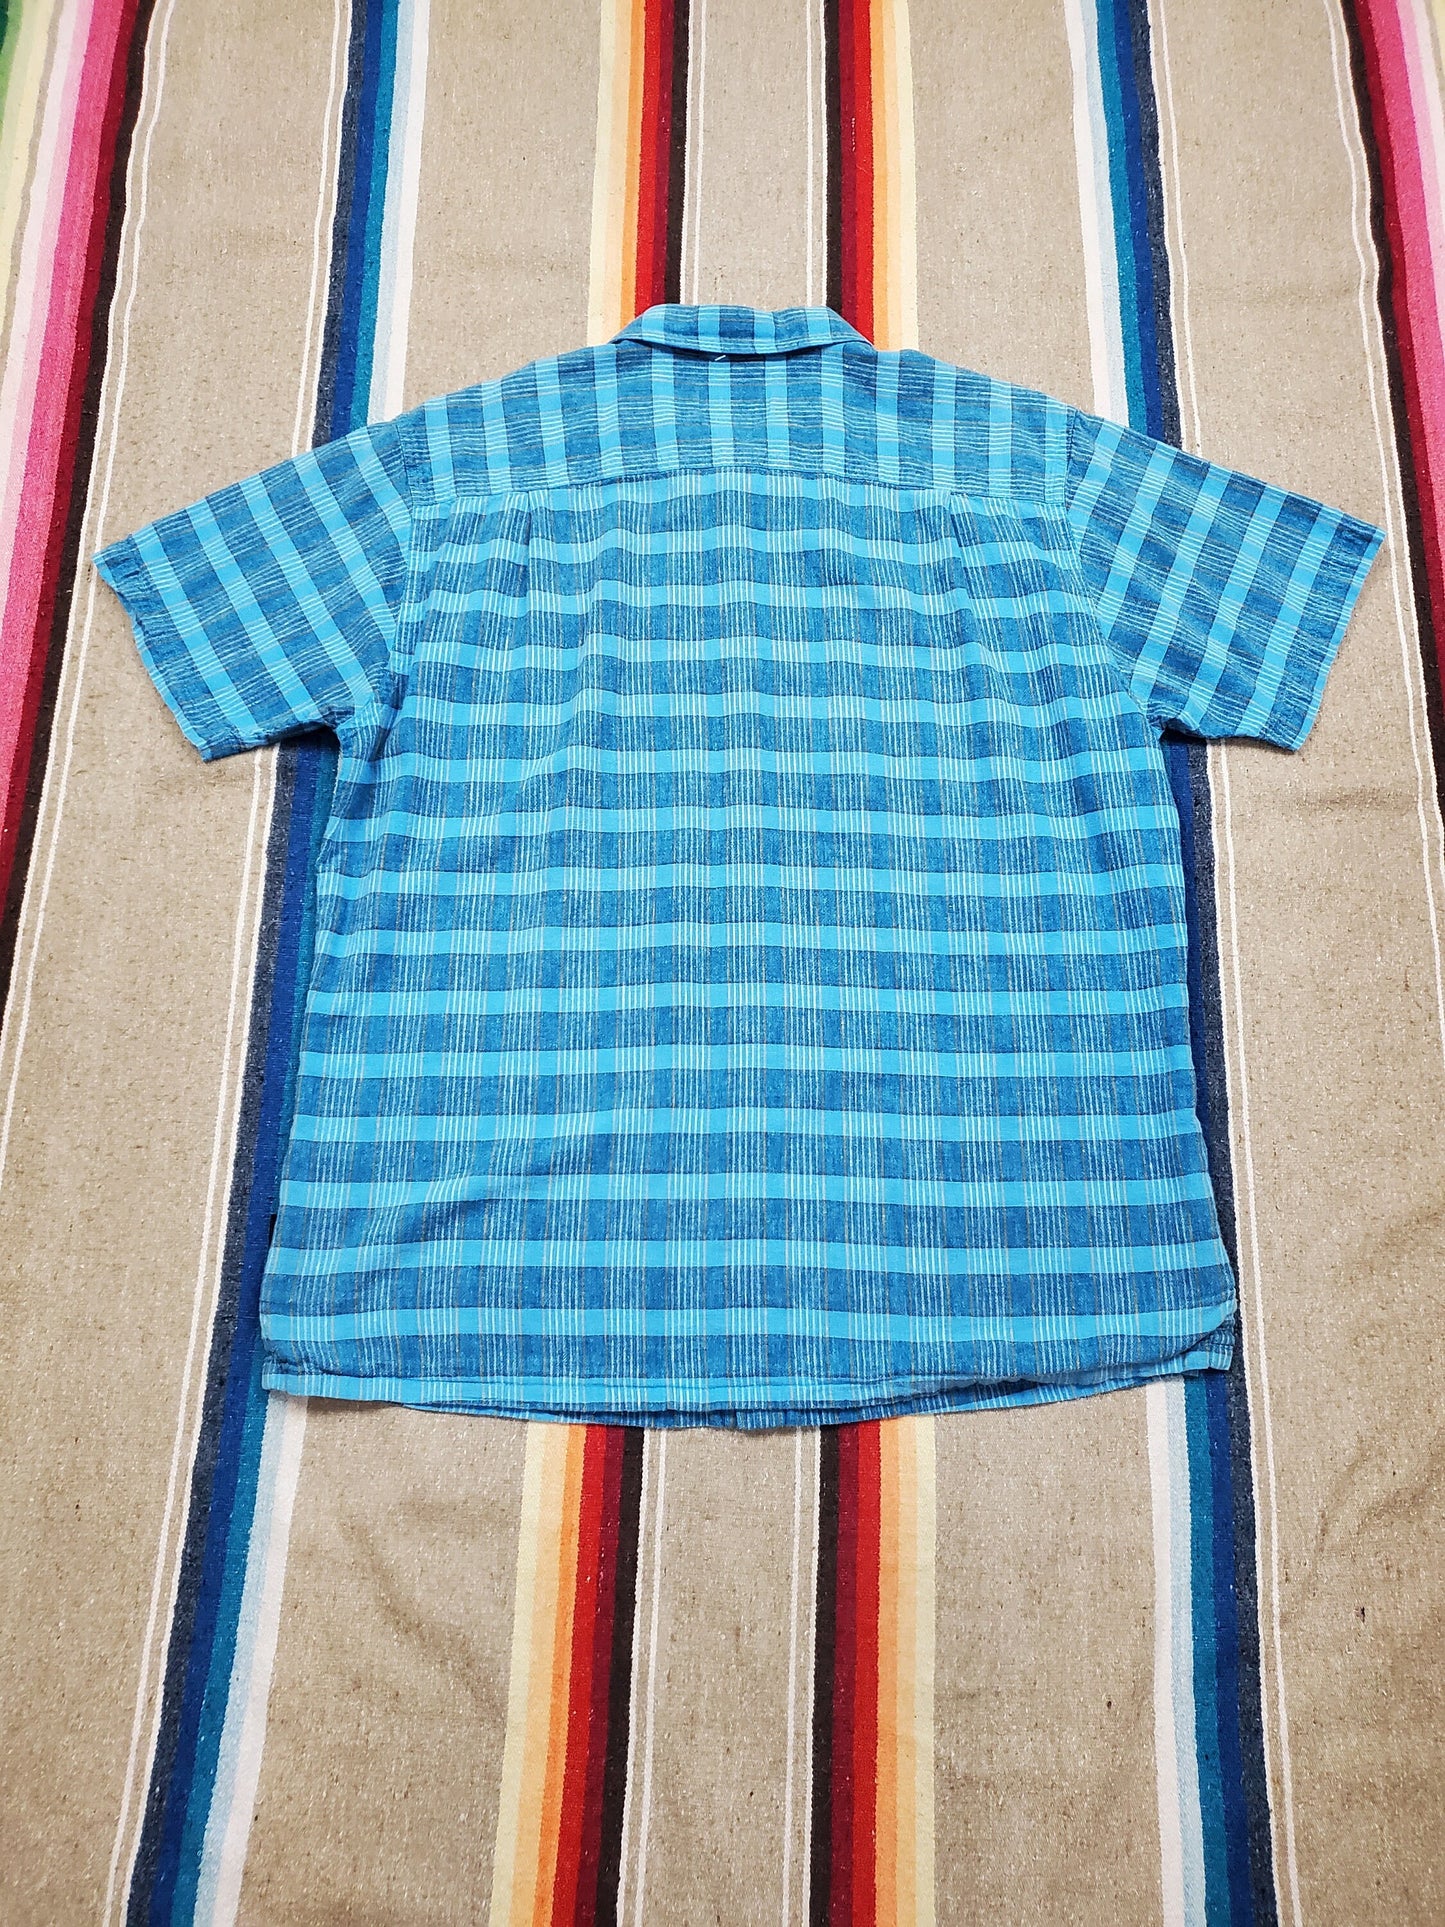 2010s Patagonia Shortsleeve Shirt Size L